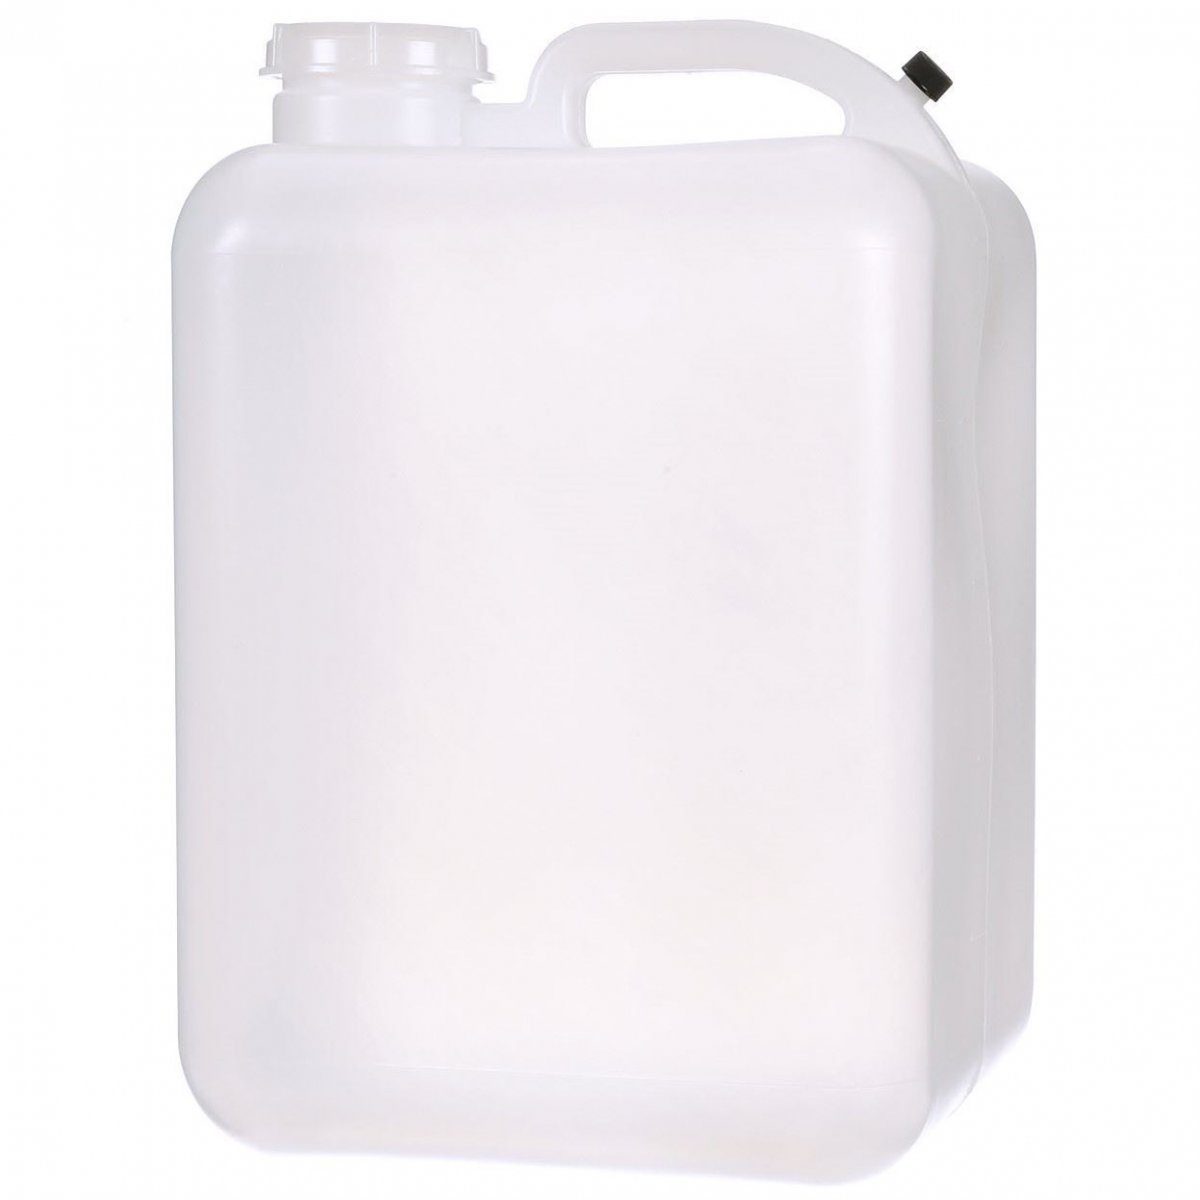 0011836_5-gallon-natural-hdpe-plastic-handled-square-jug-70-mm-neck-finish-with-closure.jpeg